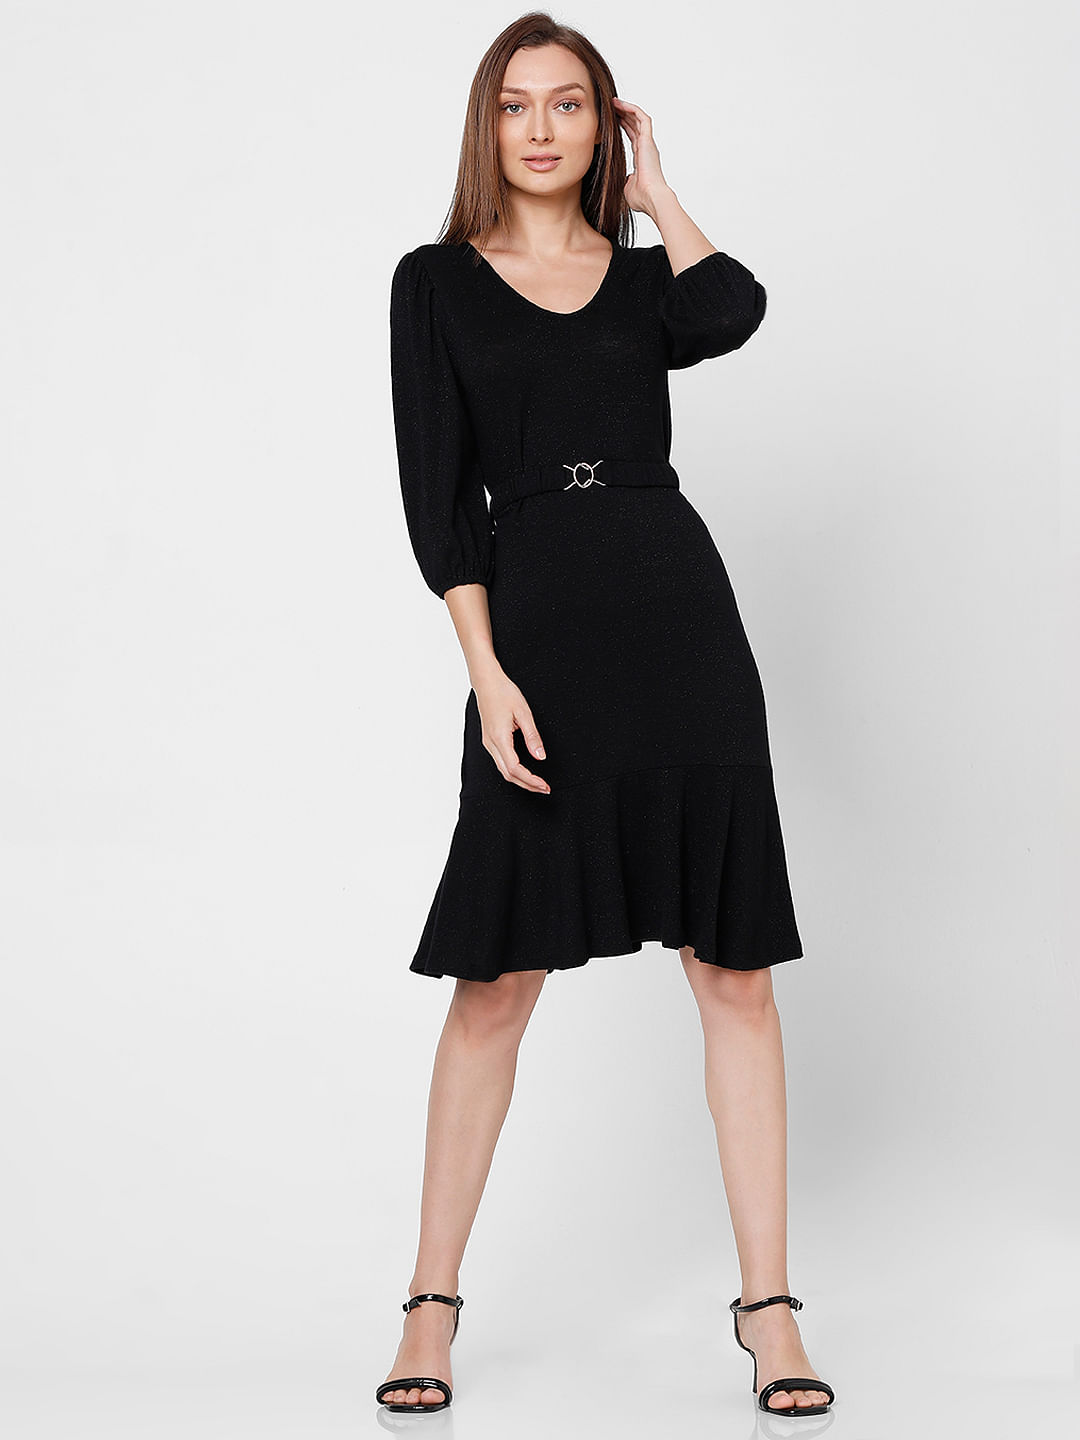 Draped jersey dress - Black - Ladies | H&M IN